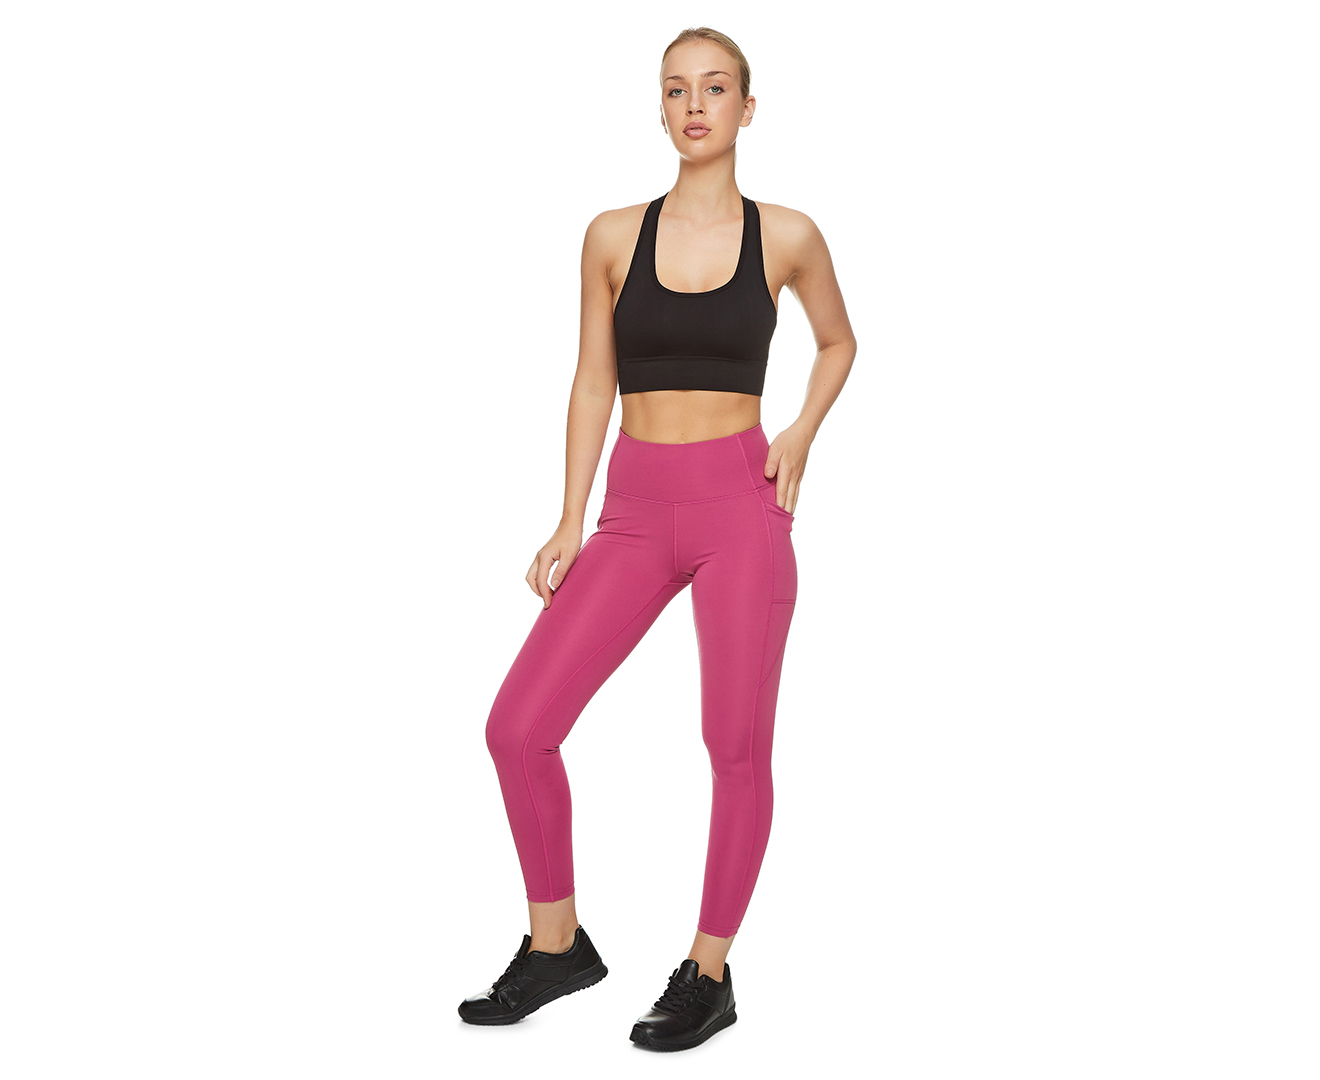 Nicole Miller Sport Women's Pocket Tights / Leggings - Berry | Catch.co.nz